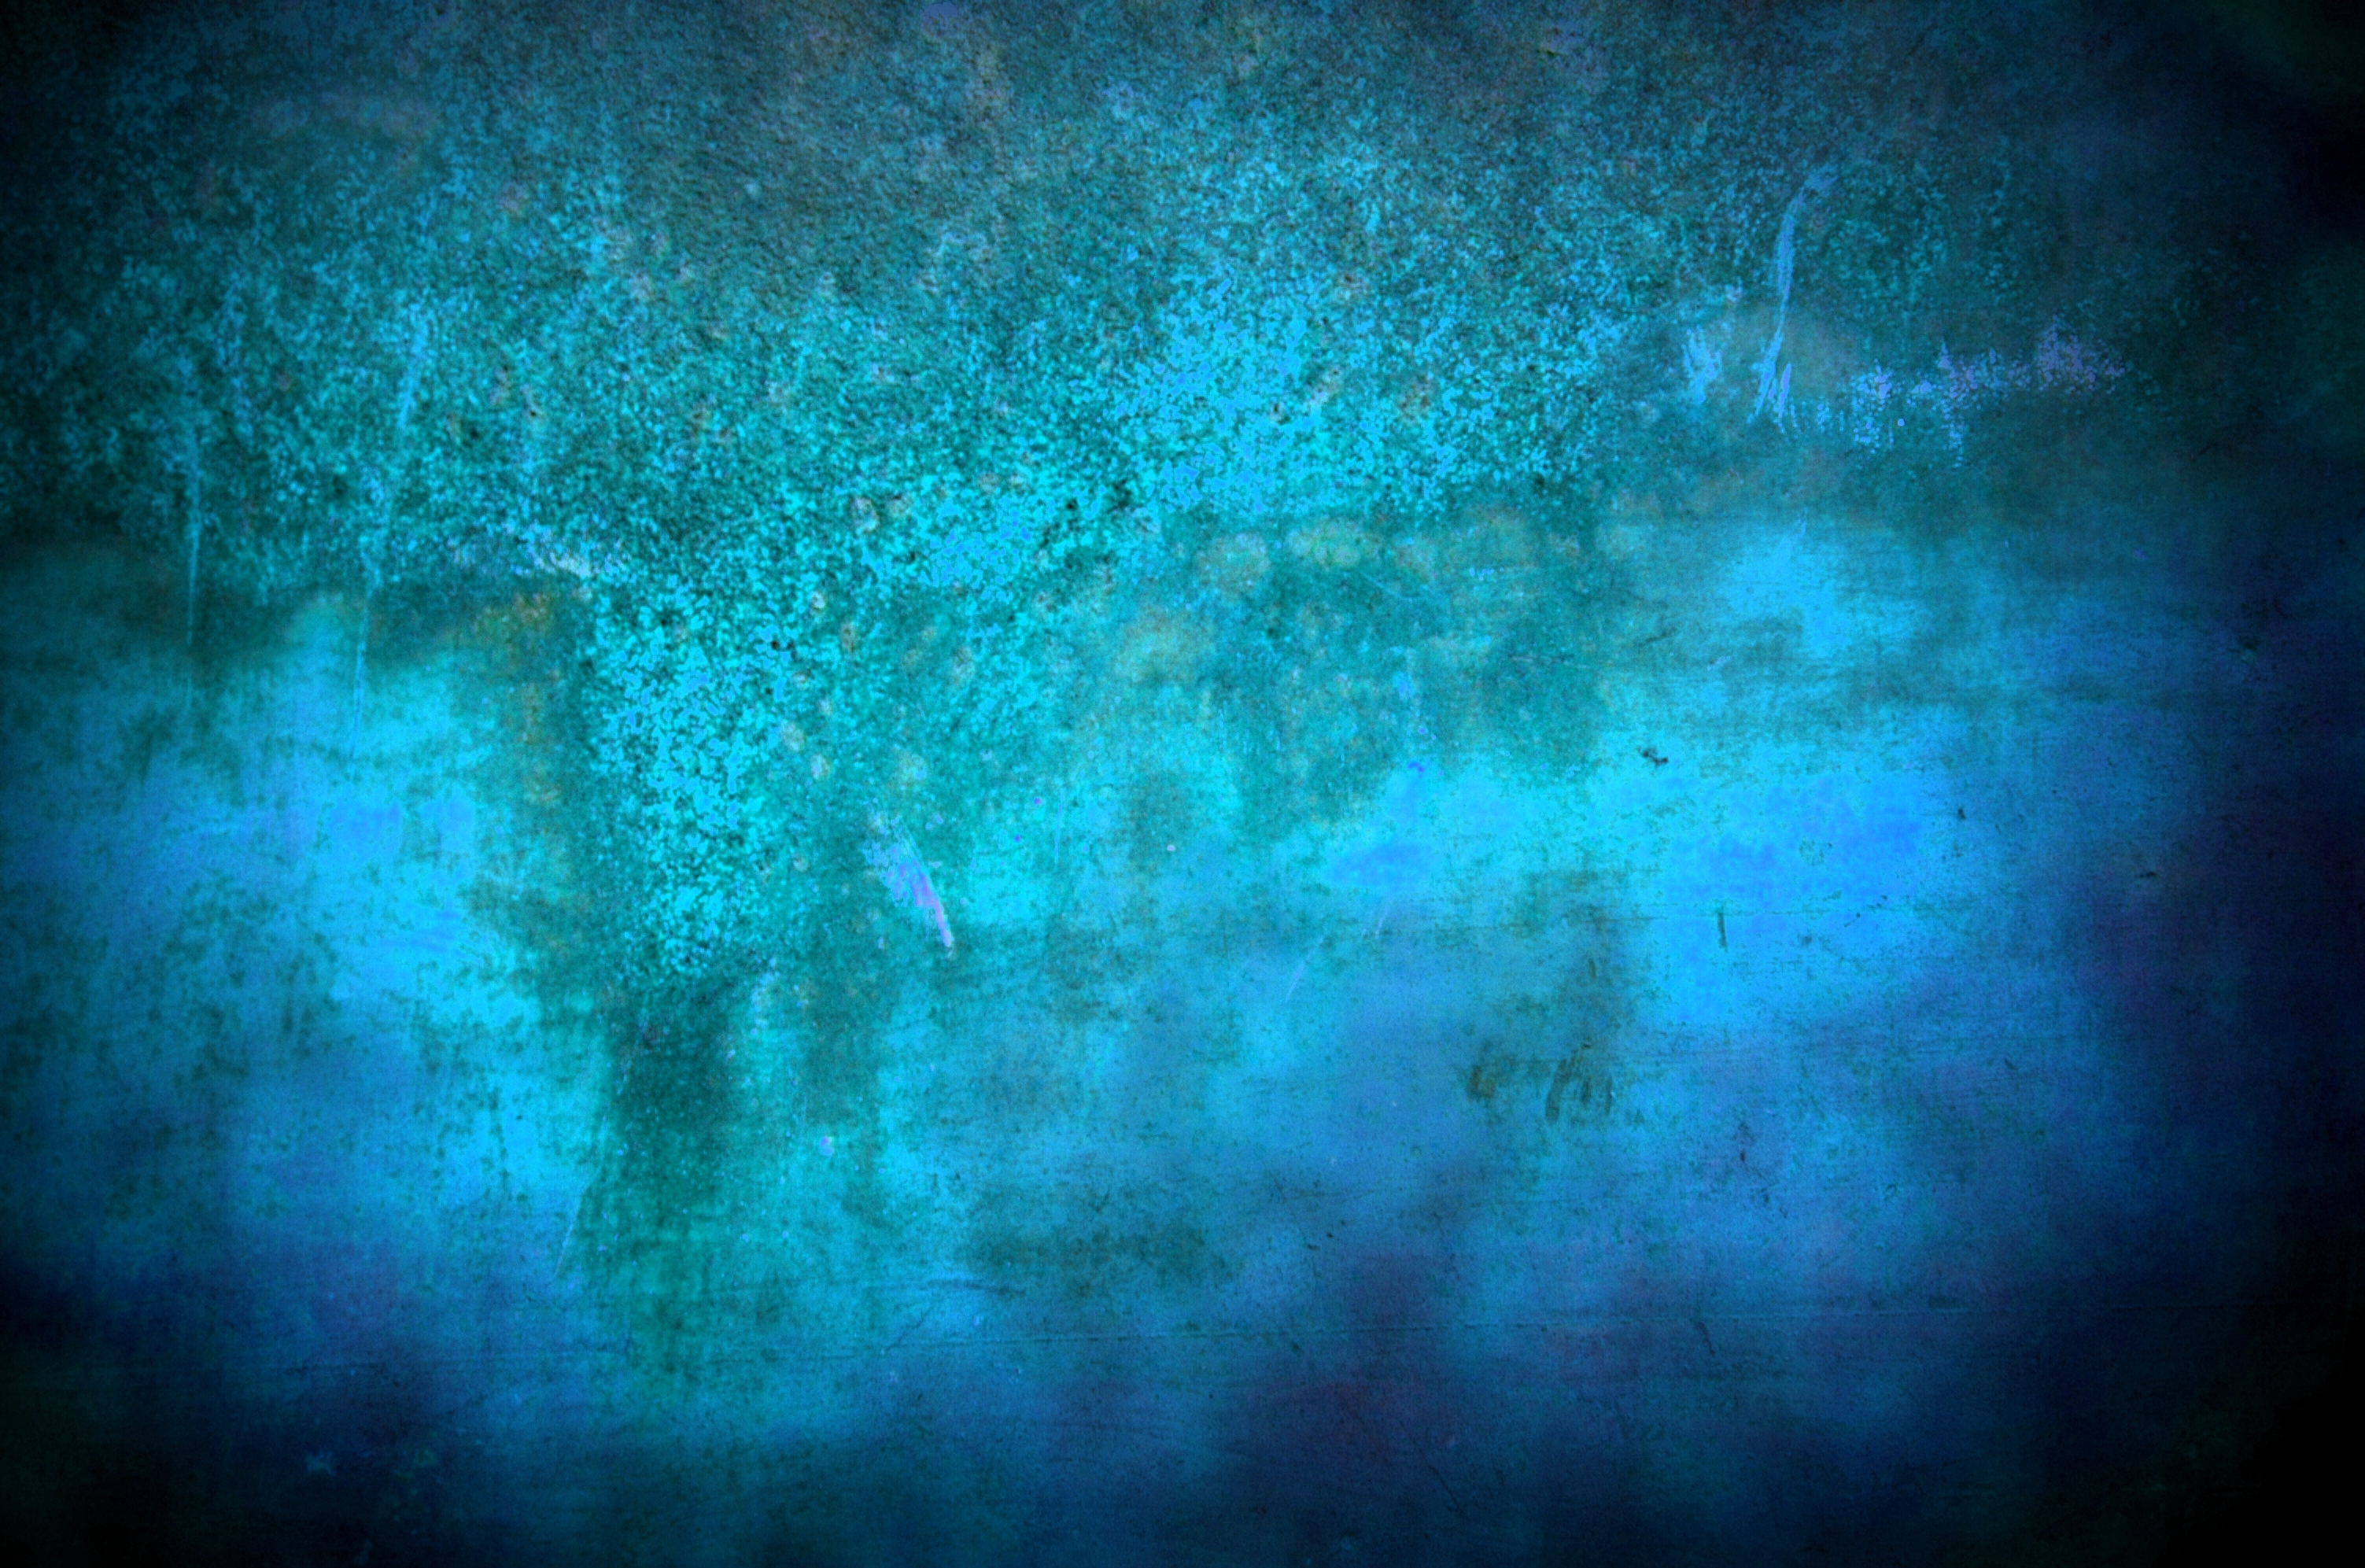 aqua texture - layer - desktop wallpaper background | Flickr - Photo